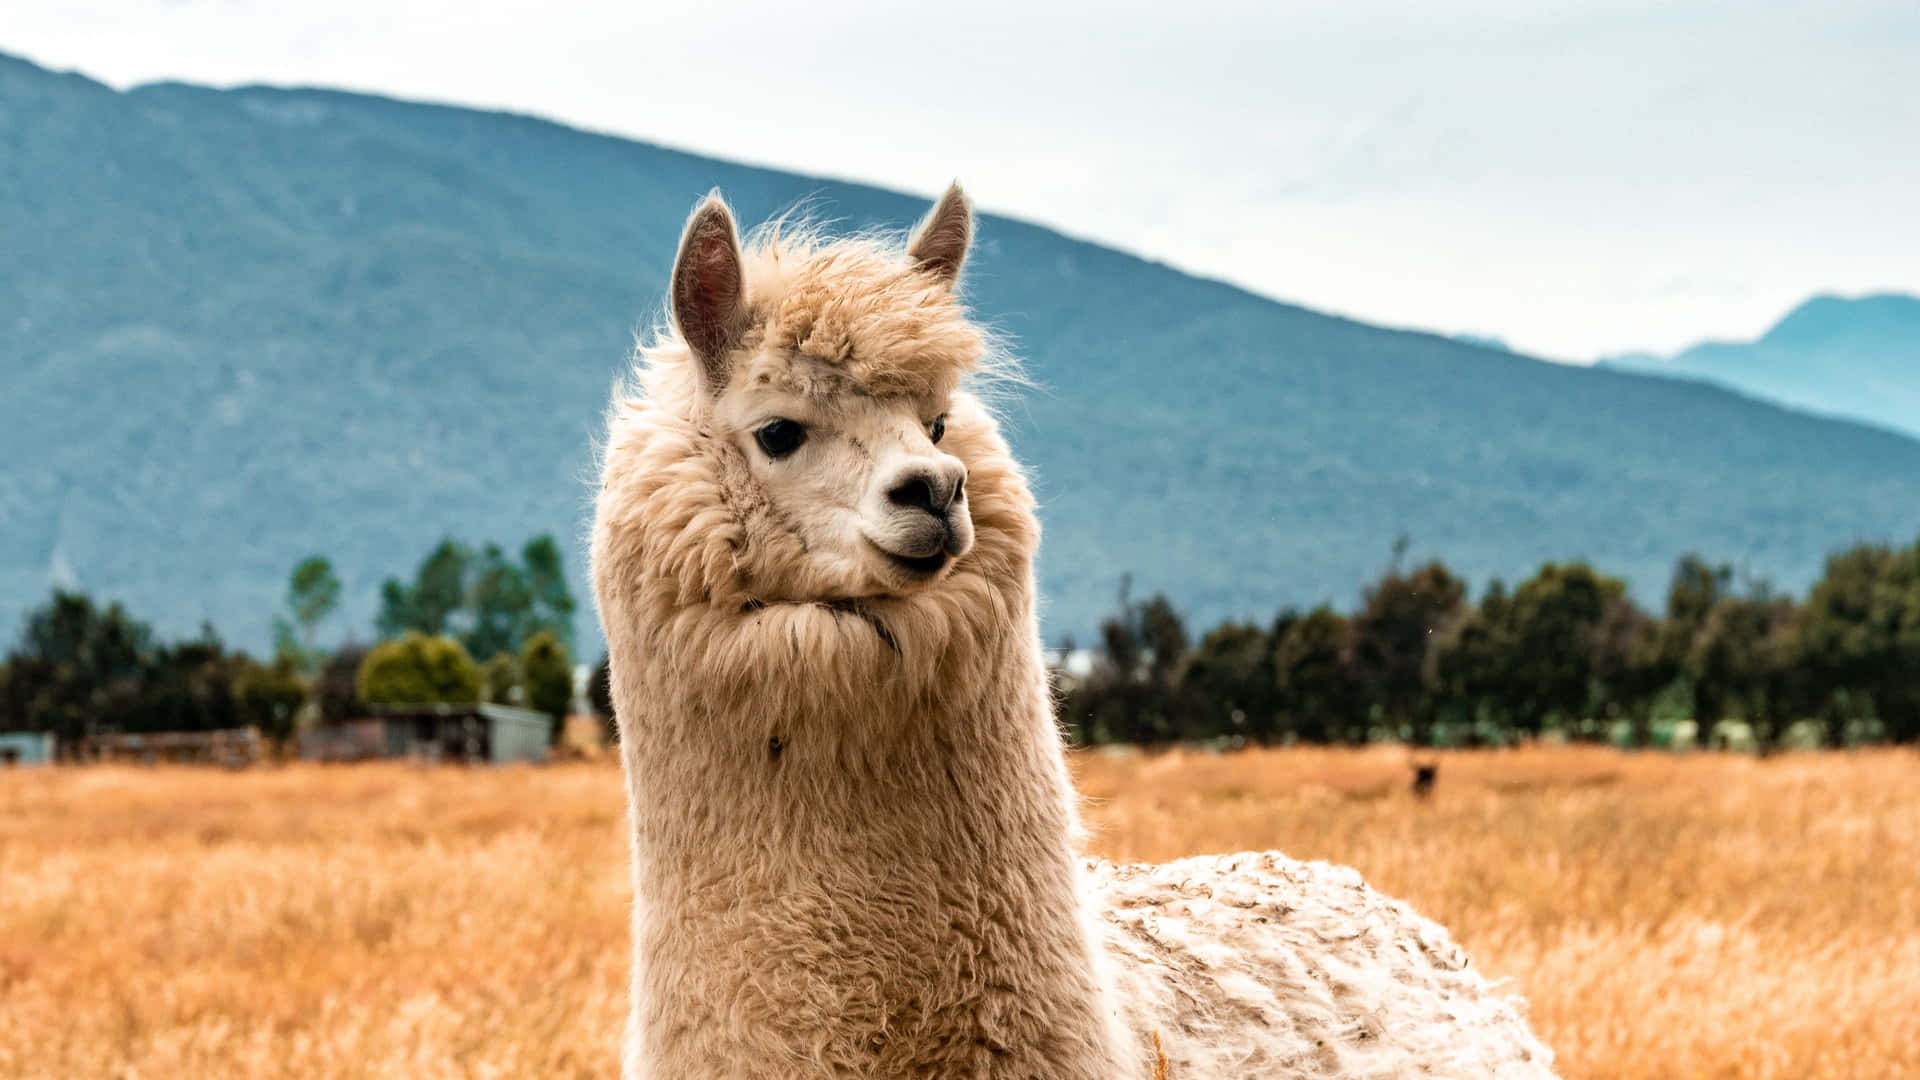 Meet the adorable Kawaii Llama, bringing cuteness overload to your screen! Wallpaper